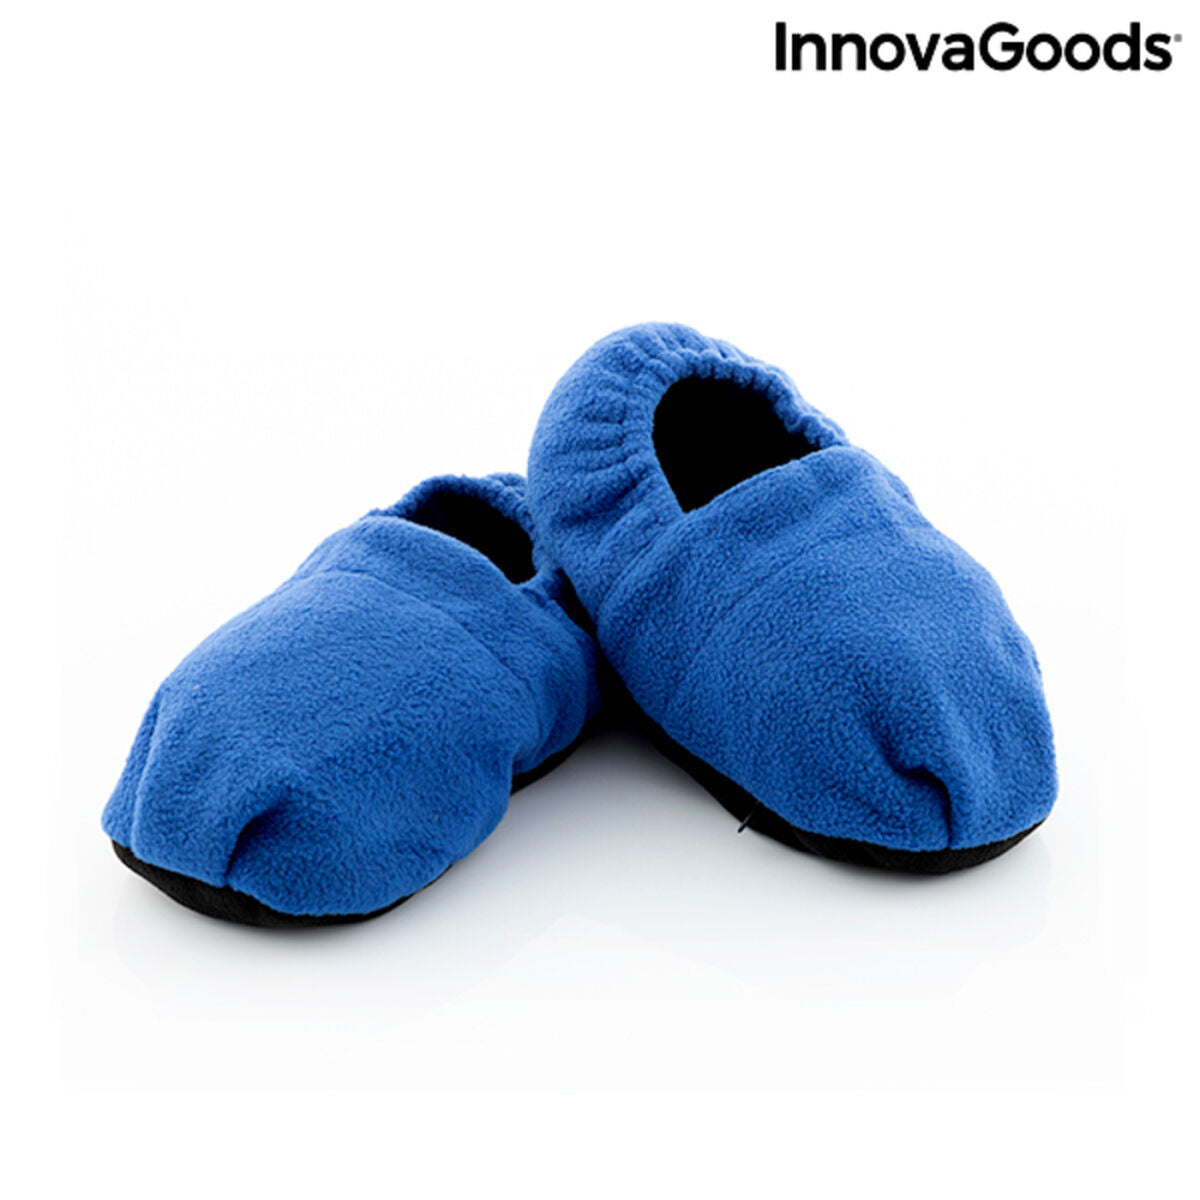 Chaussons Chauffants Micro-ondes InnovaGoods Bleu